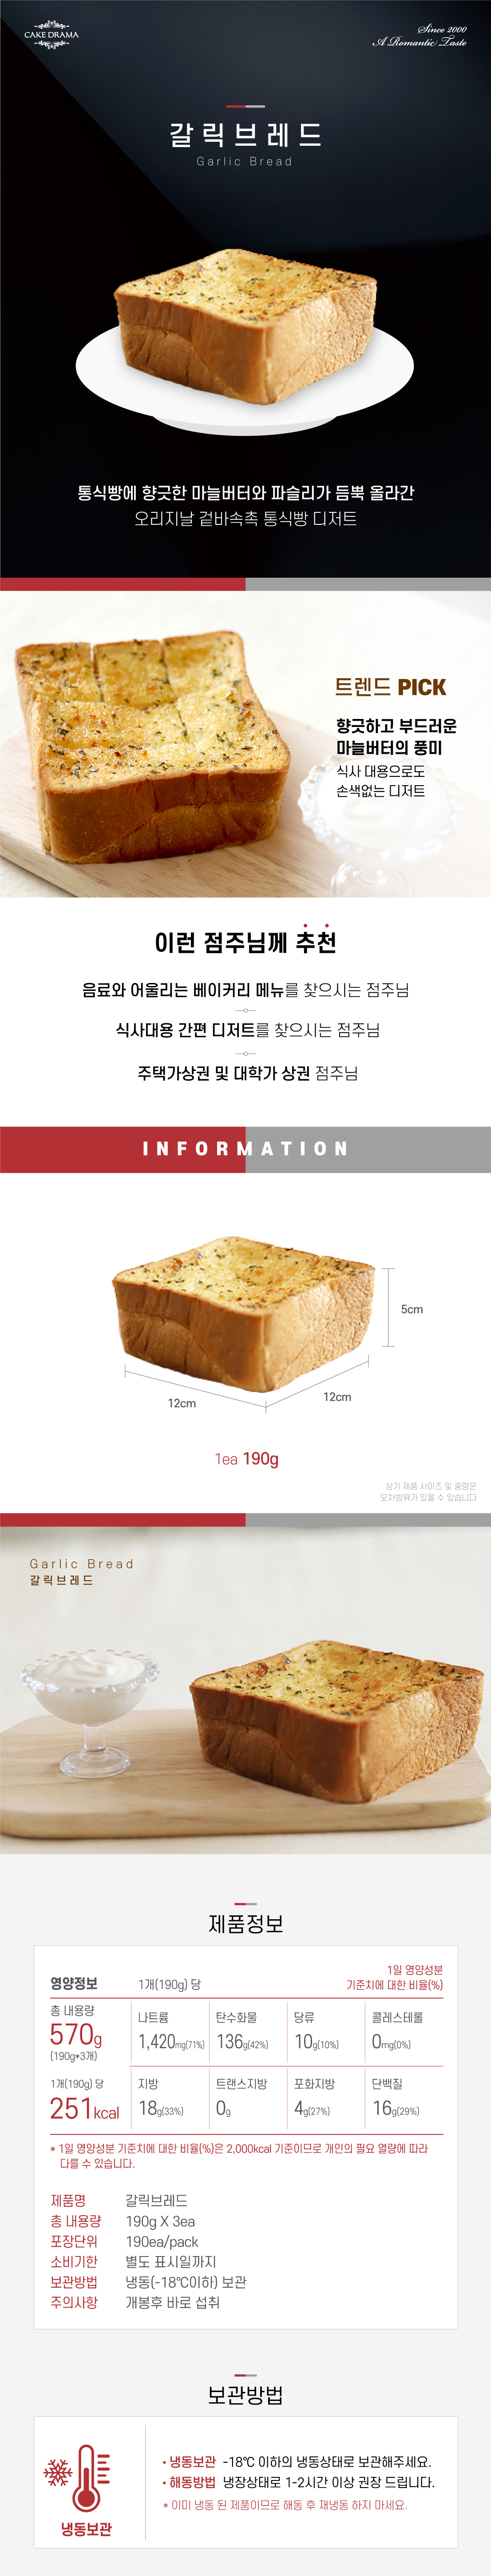 Garlic_bread.jpg"